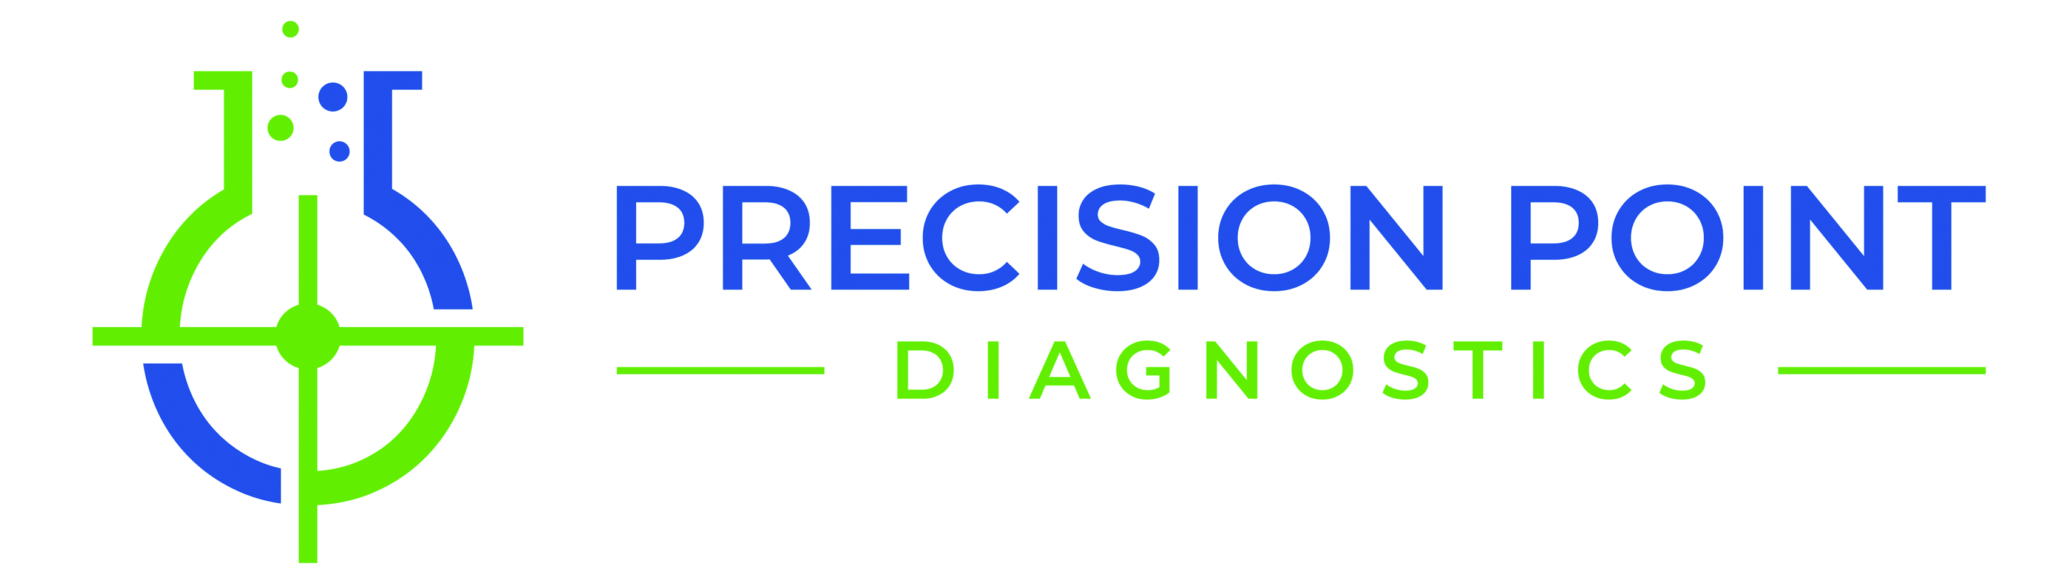 precision diagnostics